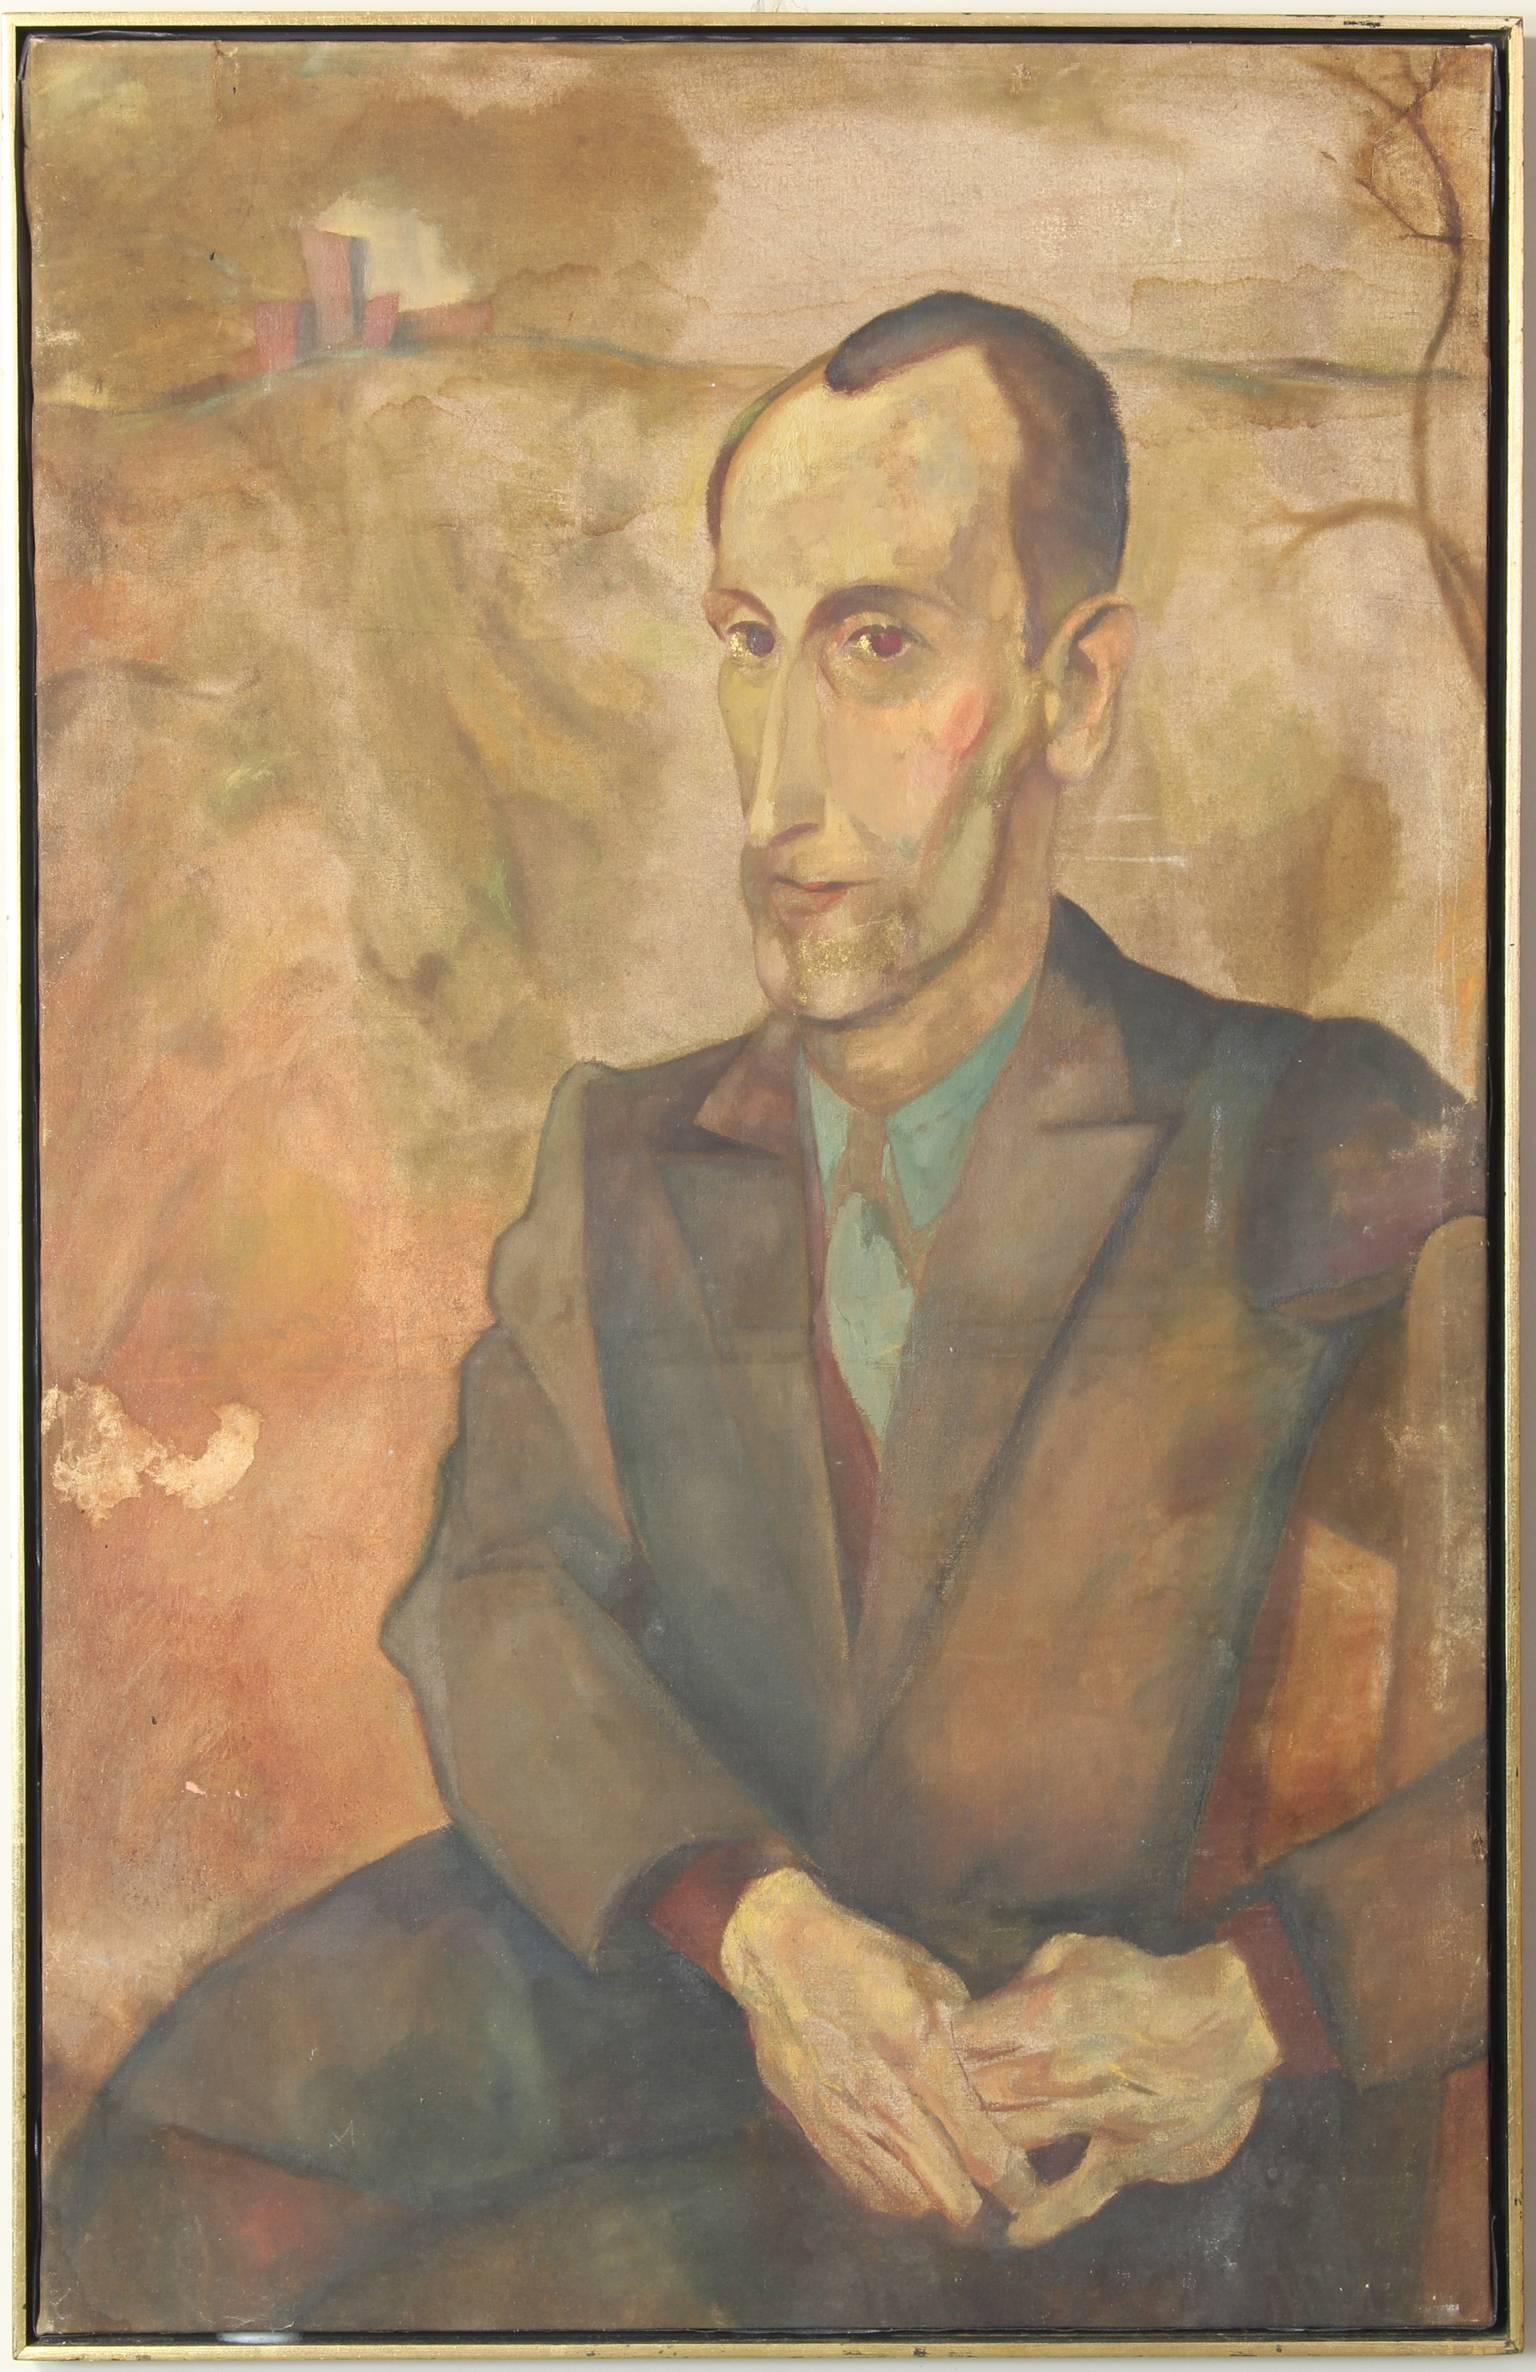 Mannerist Large Oil on Canvas Portrait of a Man